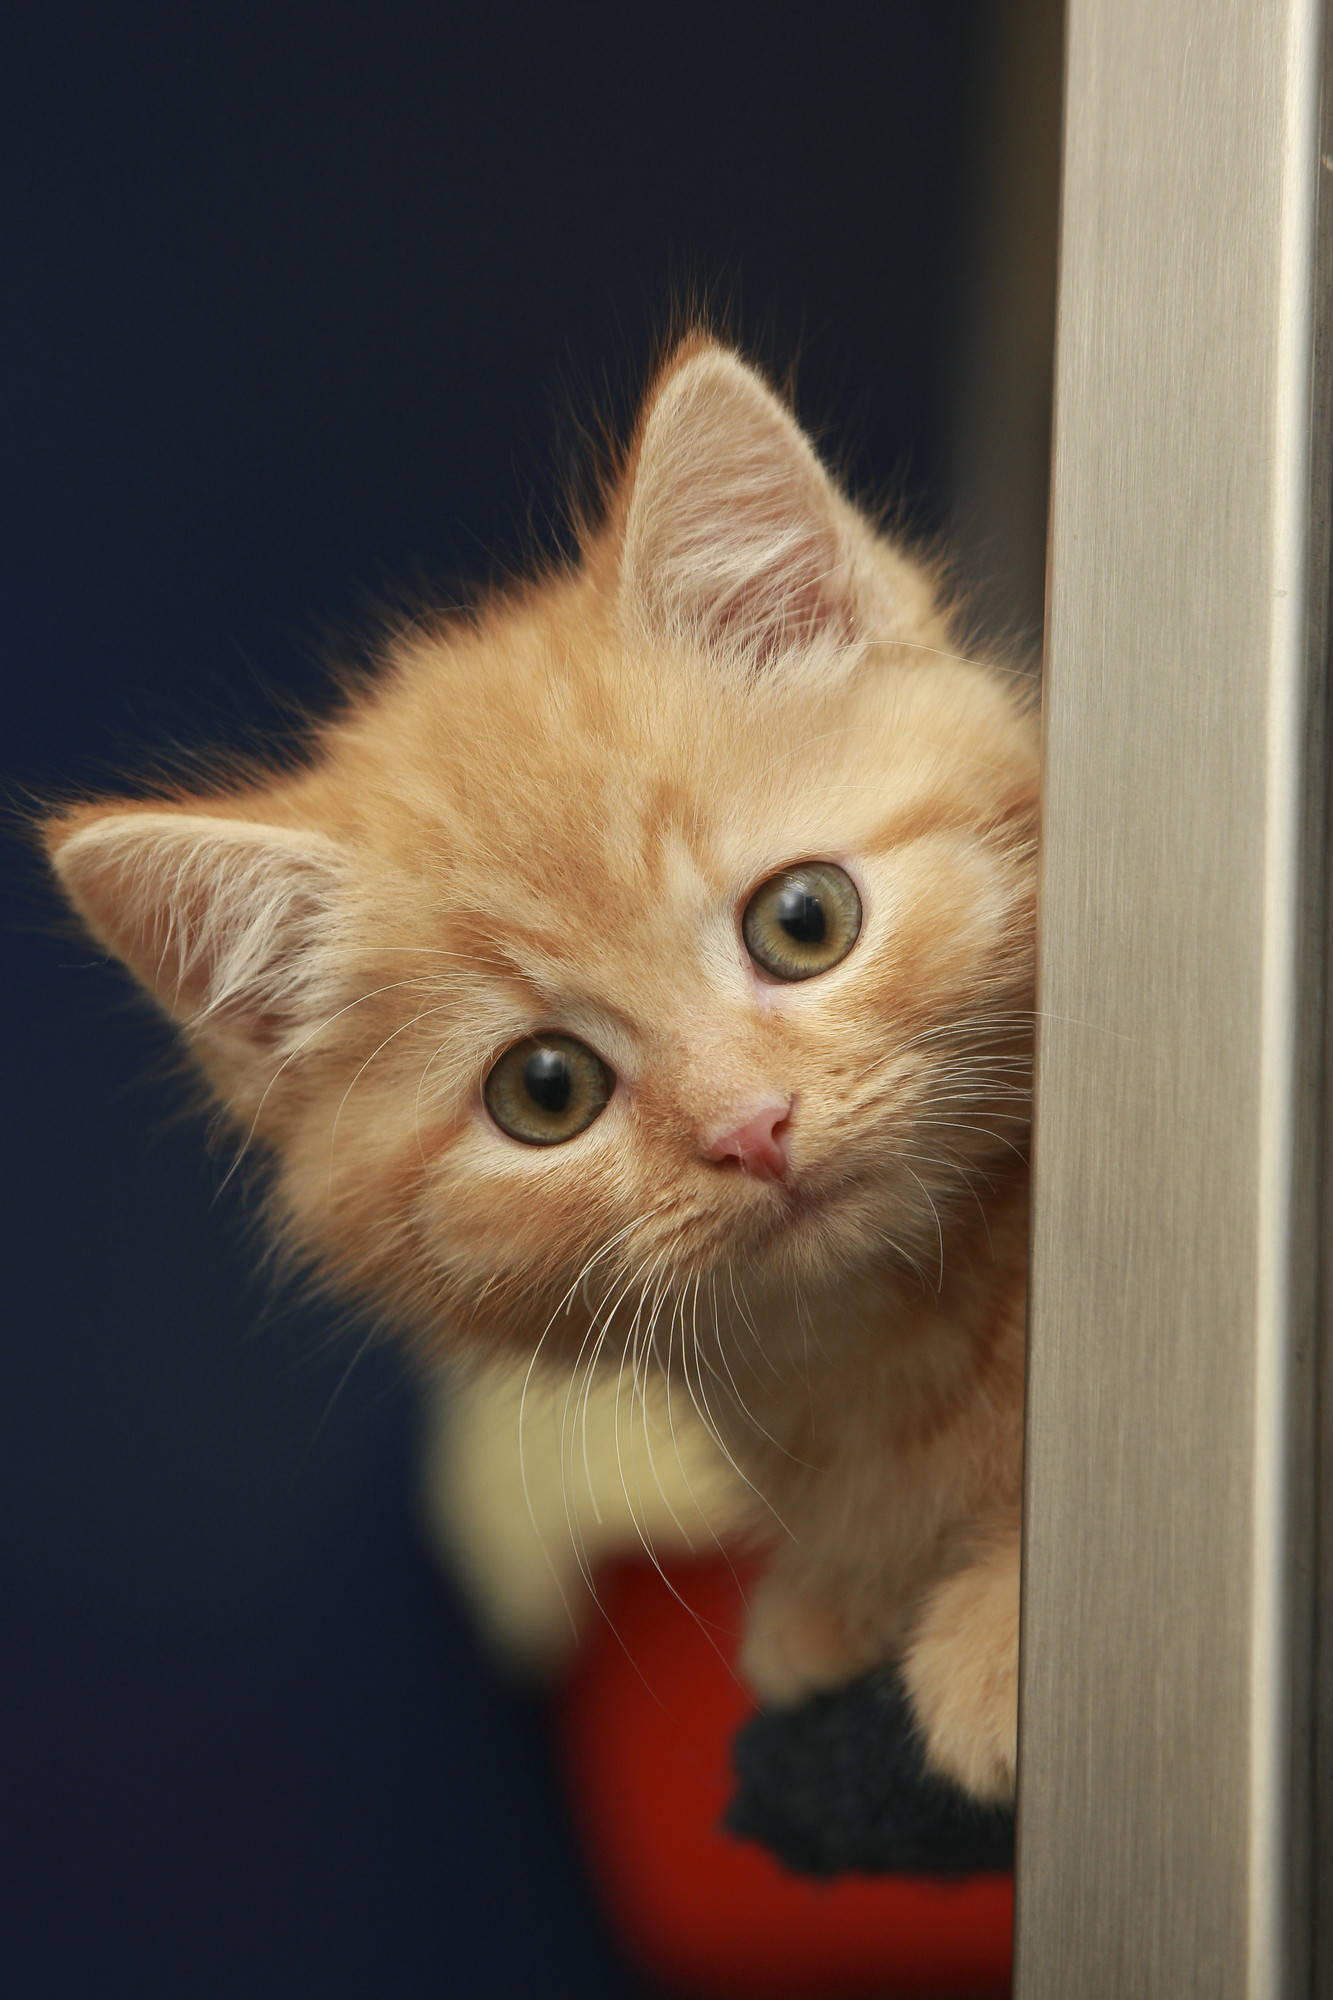 Kitten Marms at the Southampton adoption centre